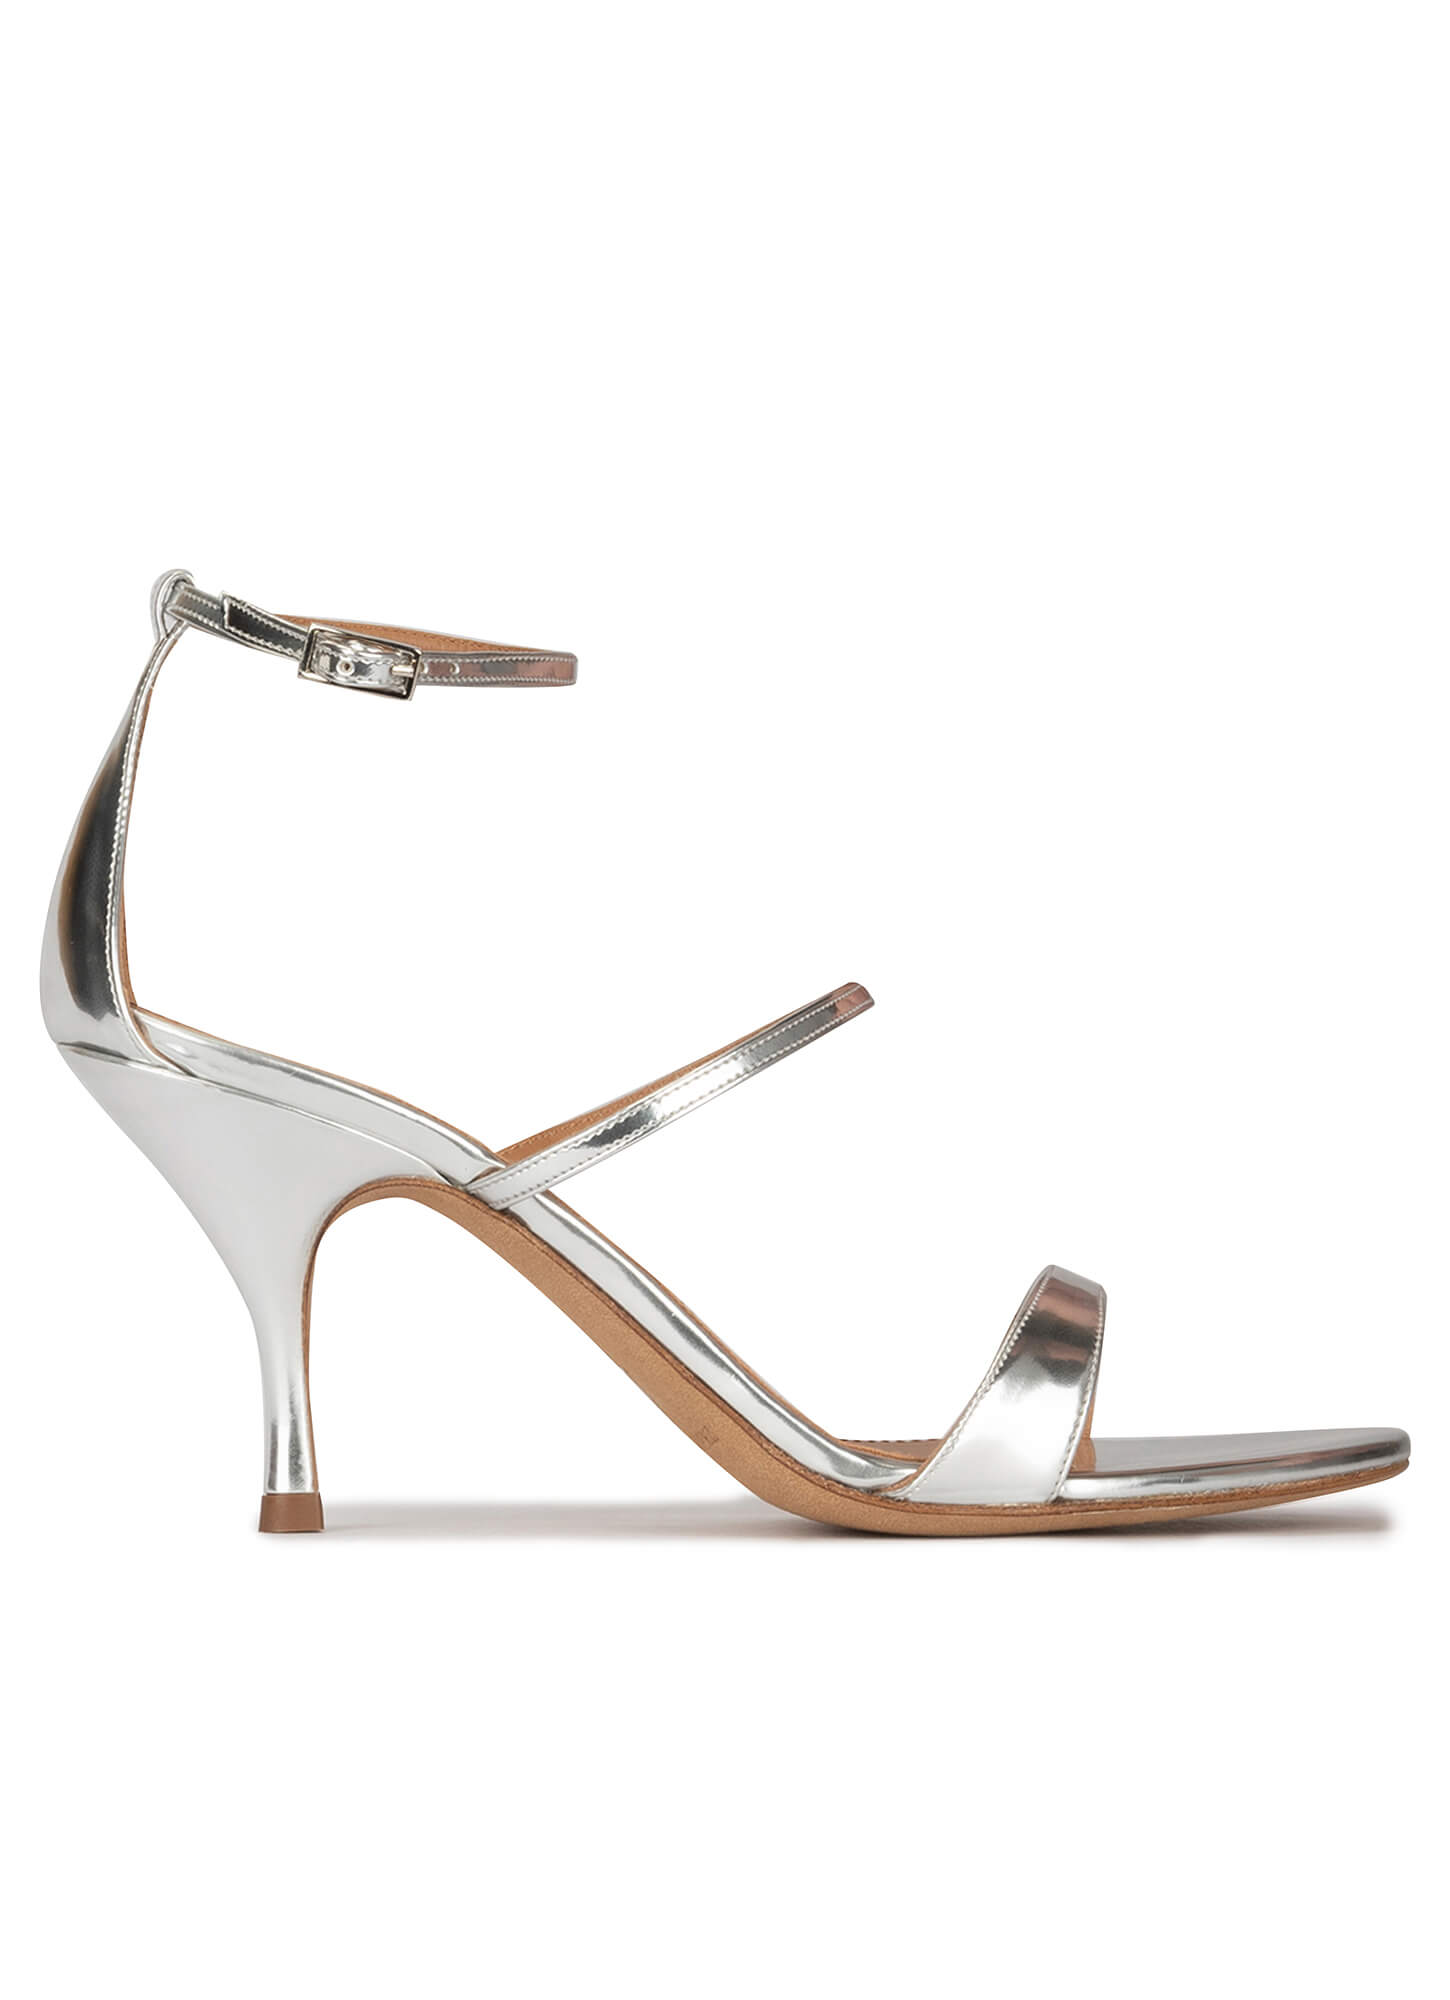 silver strappy mid heels